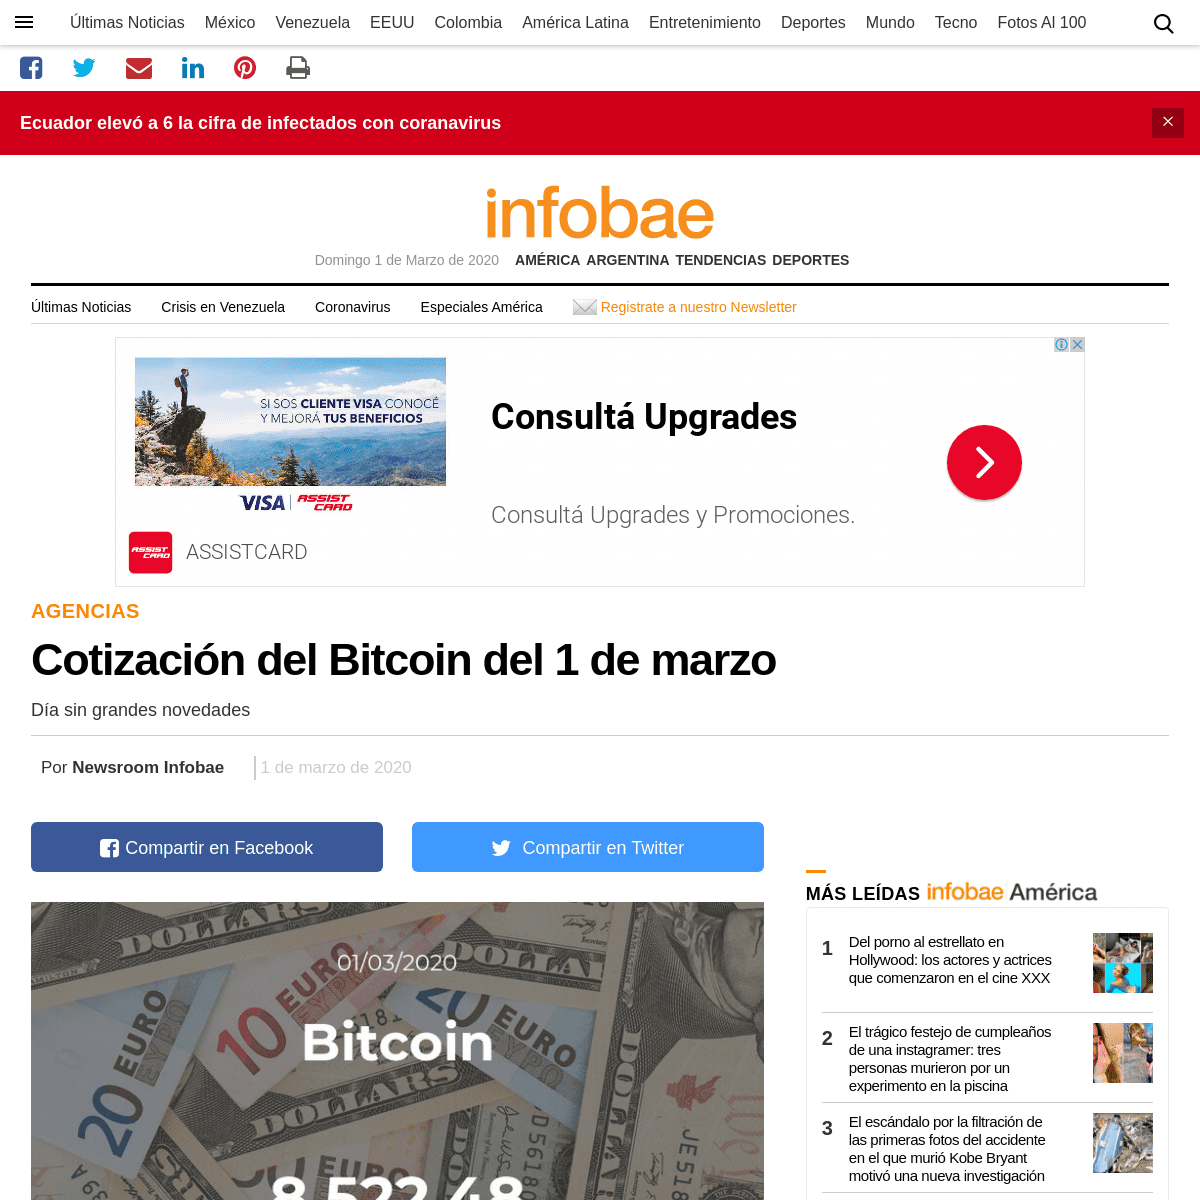 A complete backup of www.infobae.com/america/agencias/2020/03/01/cotizacion-del-bitcoin-del-1-de-marzo/